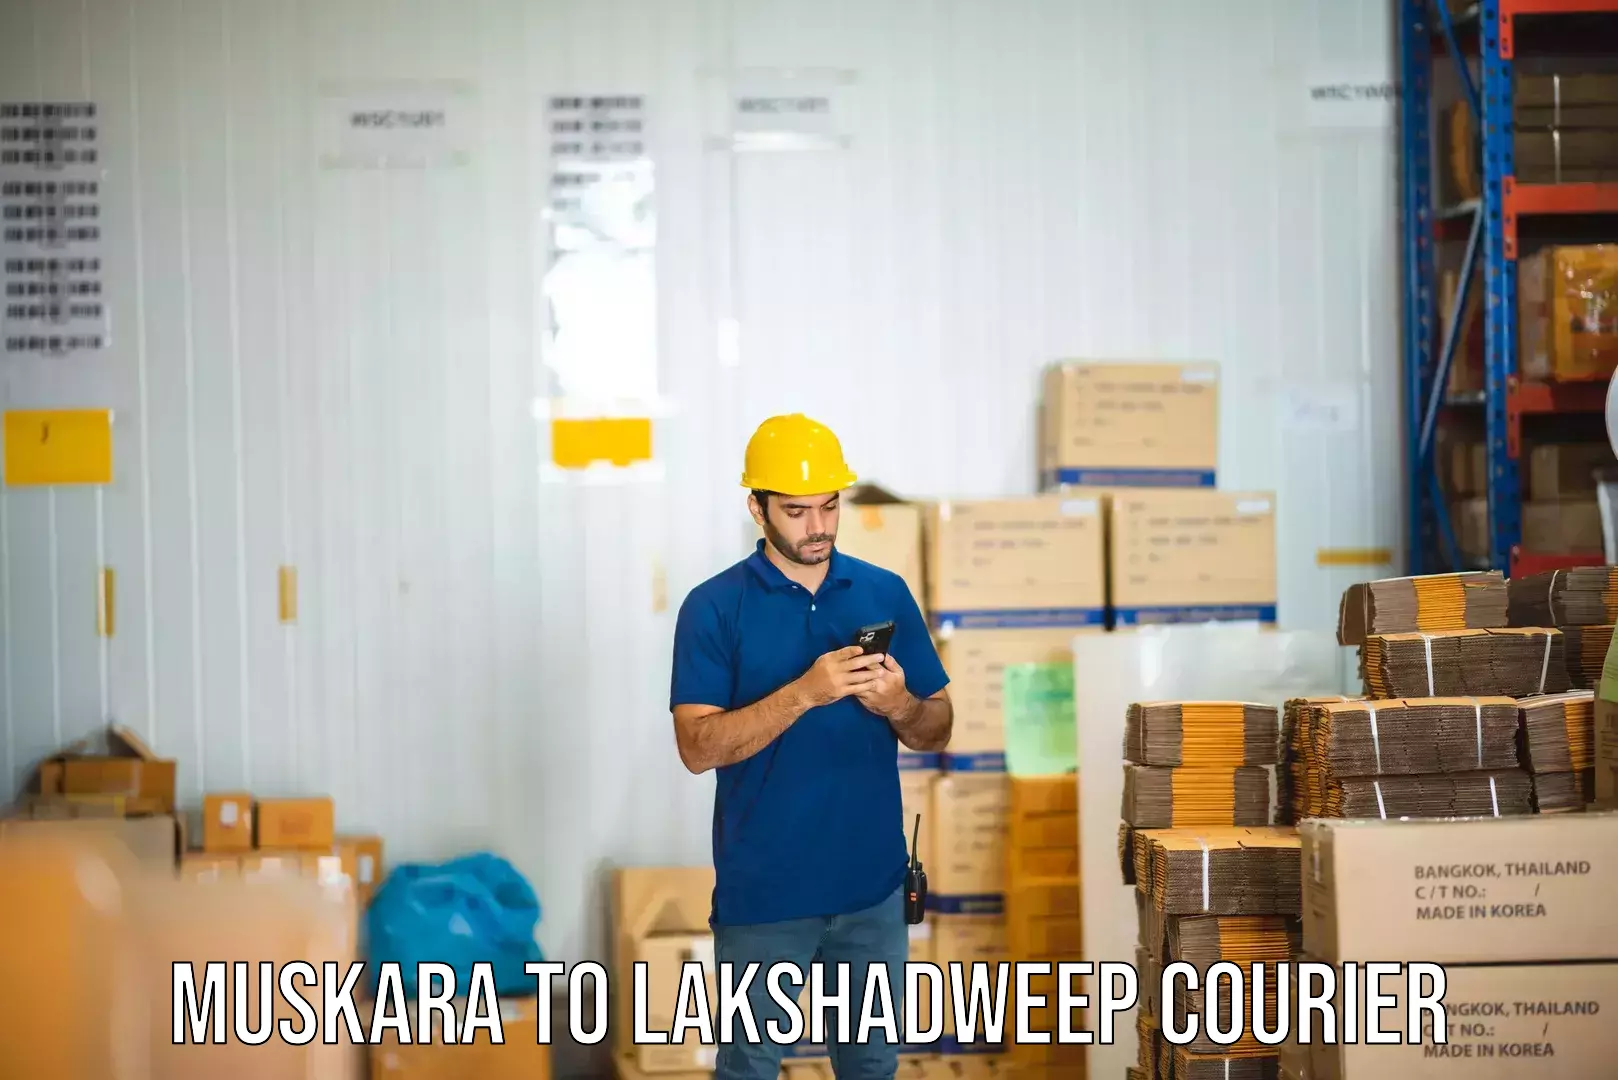 Enhanced tracking features Muskara to Lakshadweep